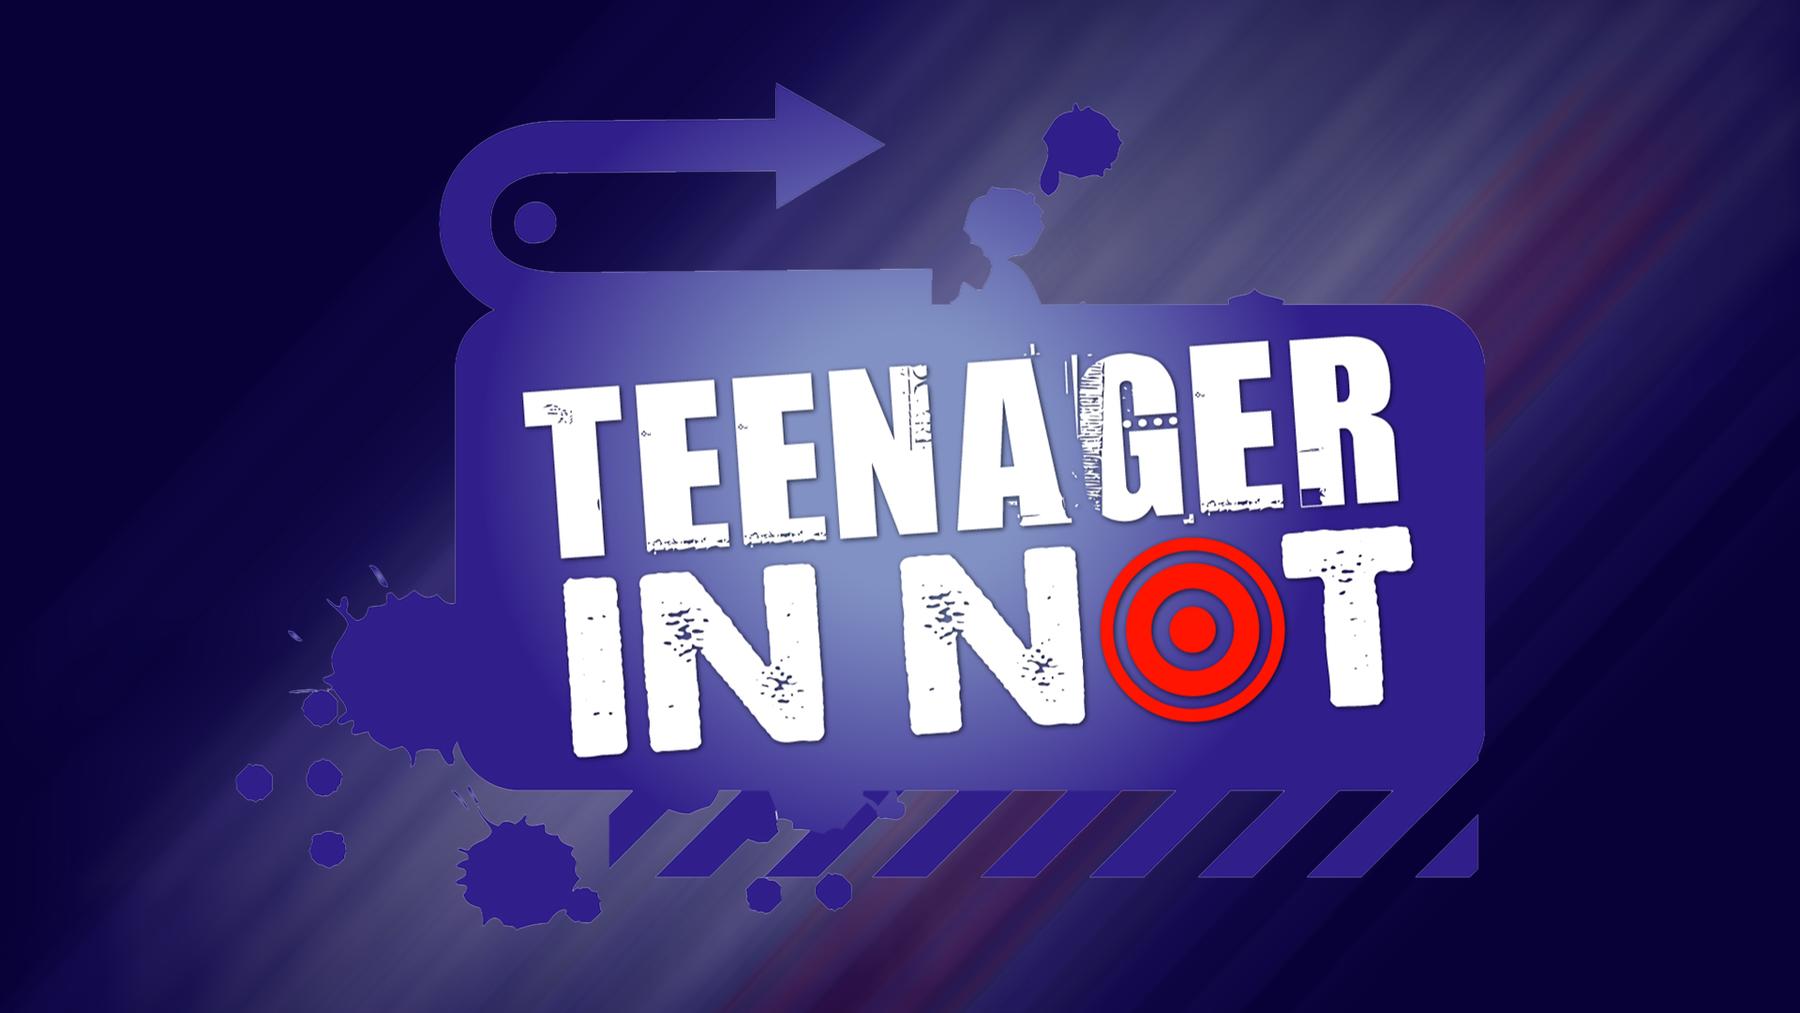 Teenager in Not